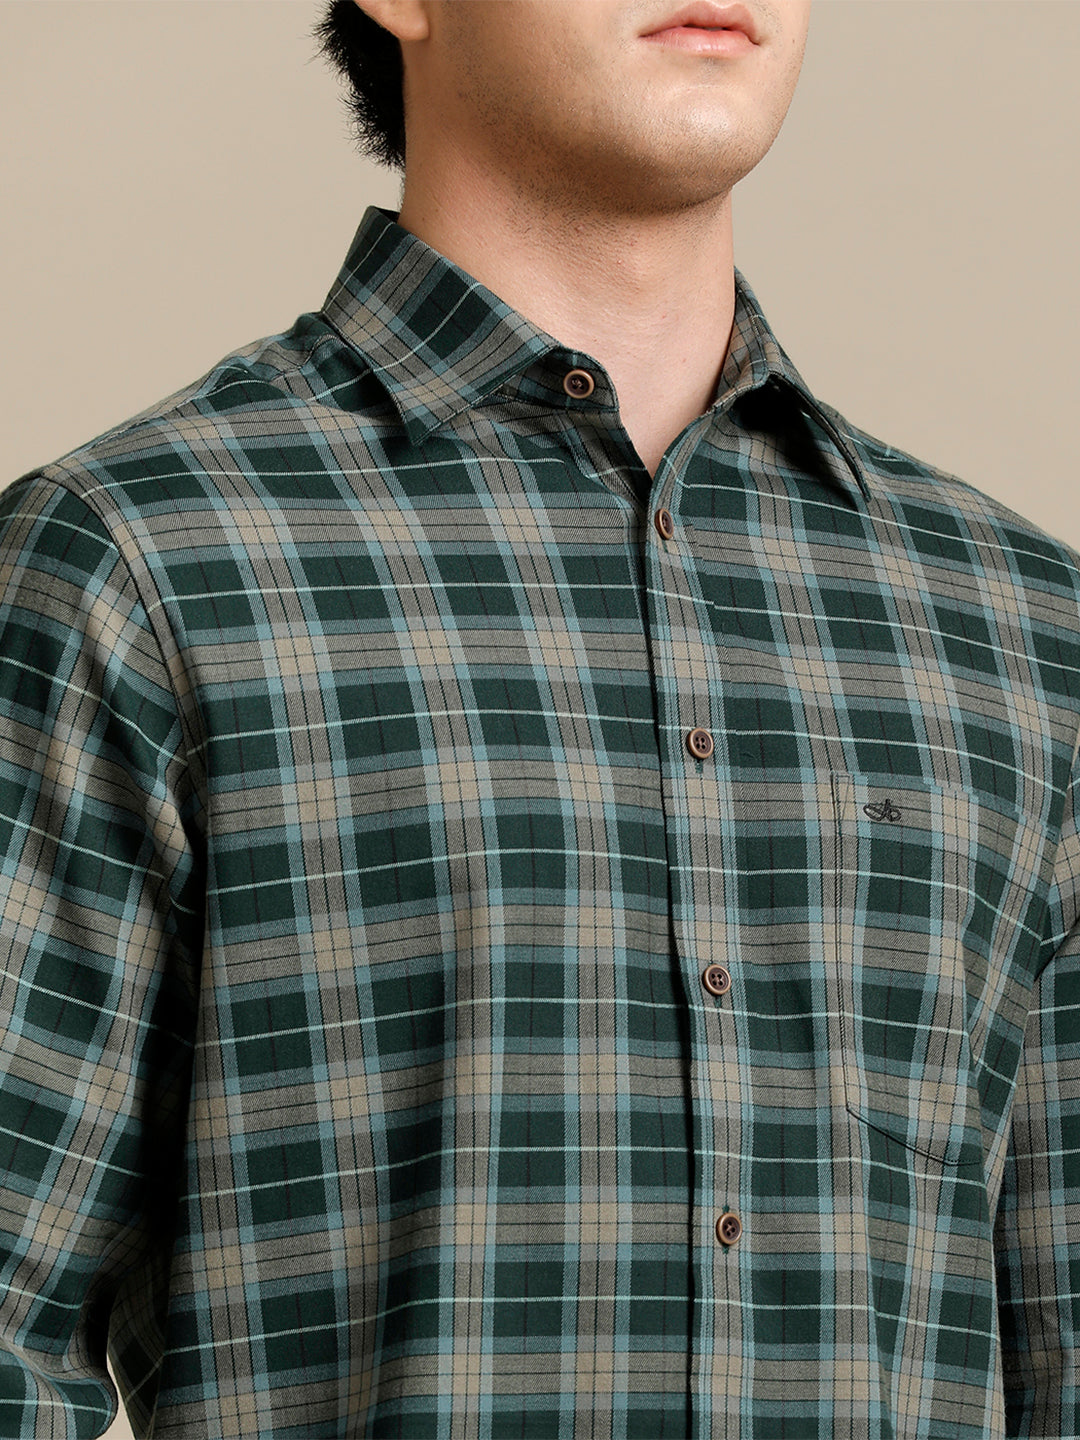 Aldeno Mens Regular Fit Check Green/Beige Casual Cotton Shirt (CHEGER)